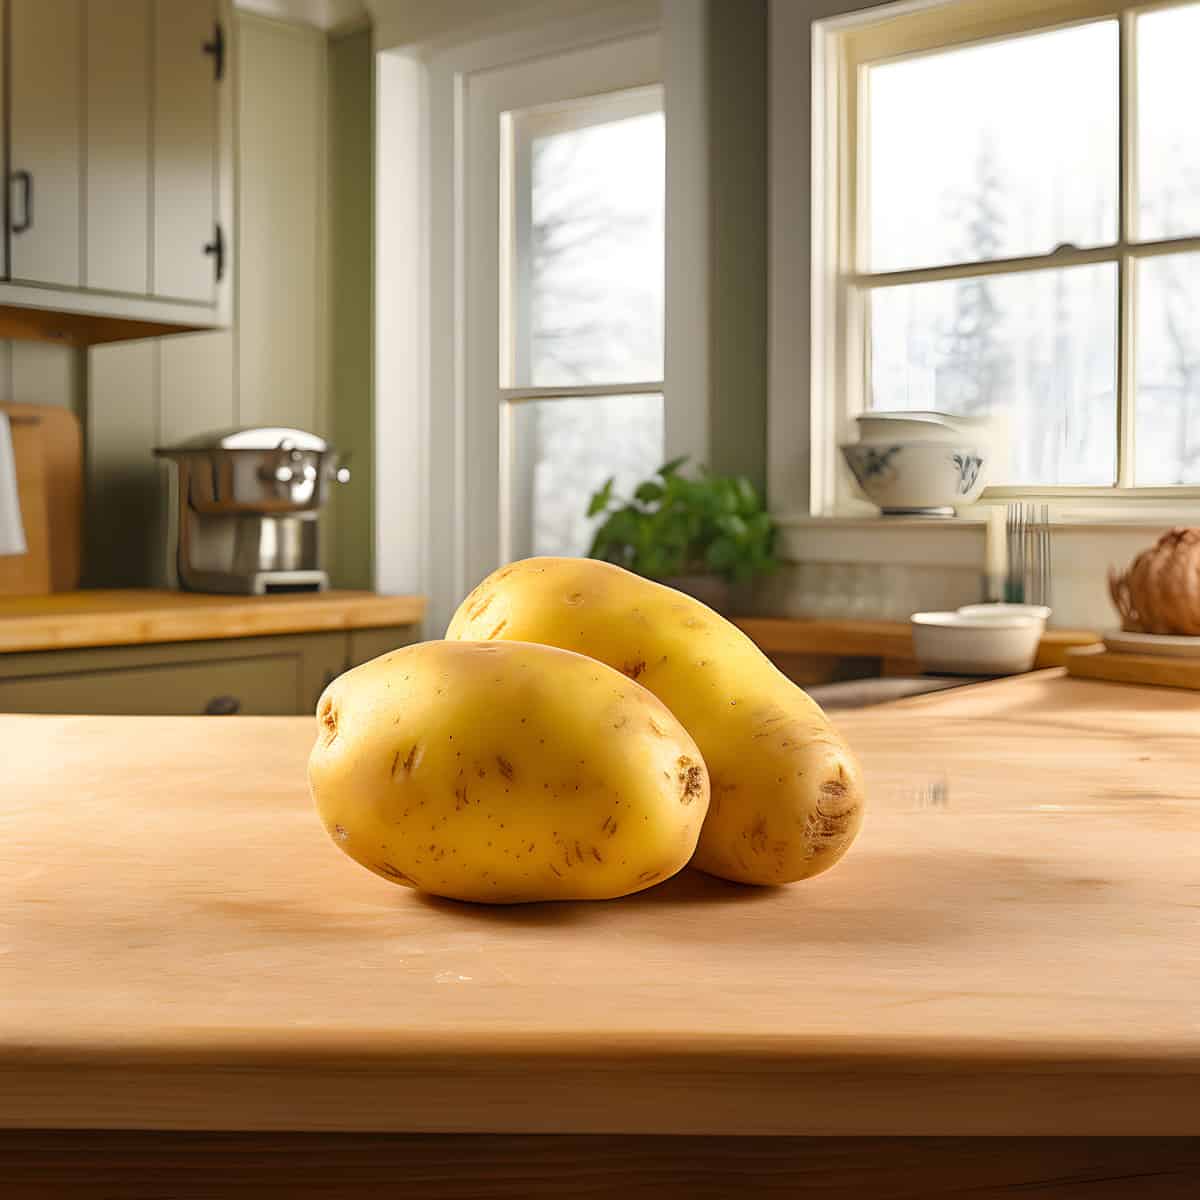 Solara Potatoes on a kitchen counter